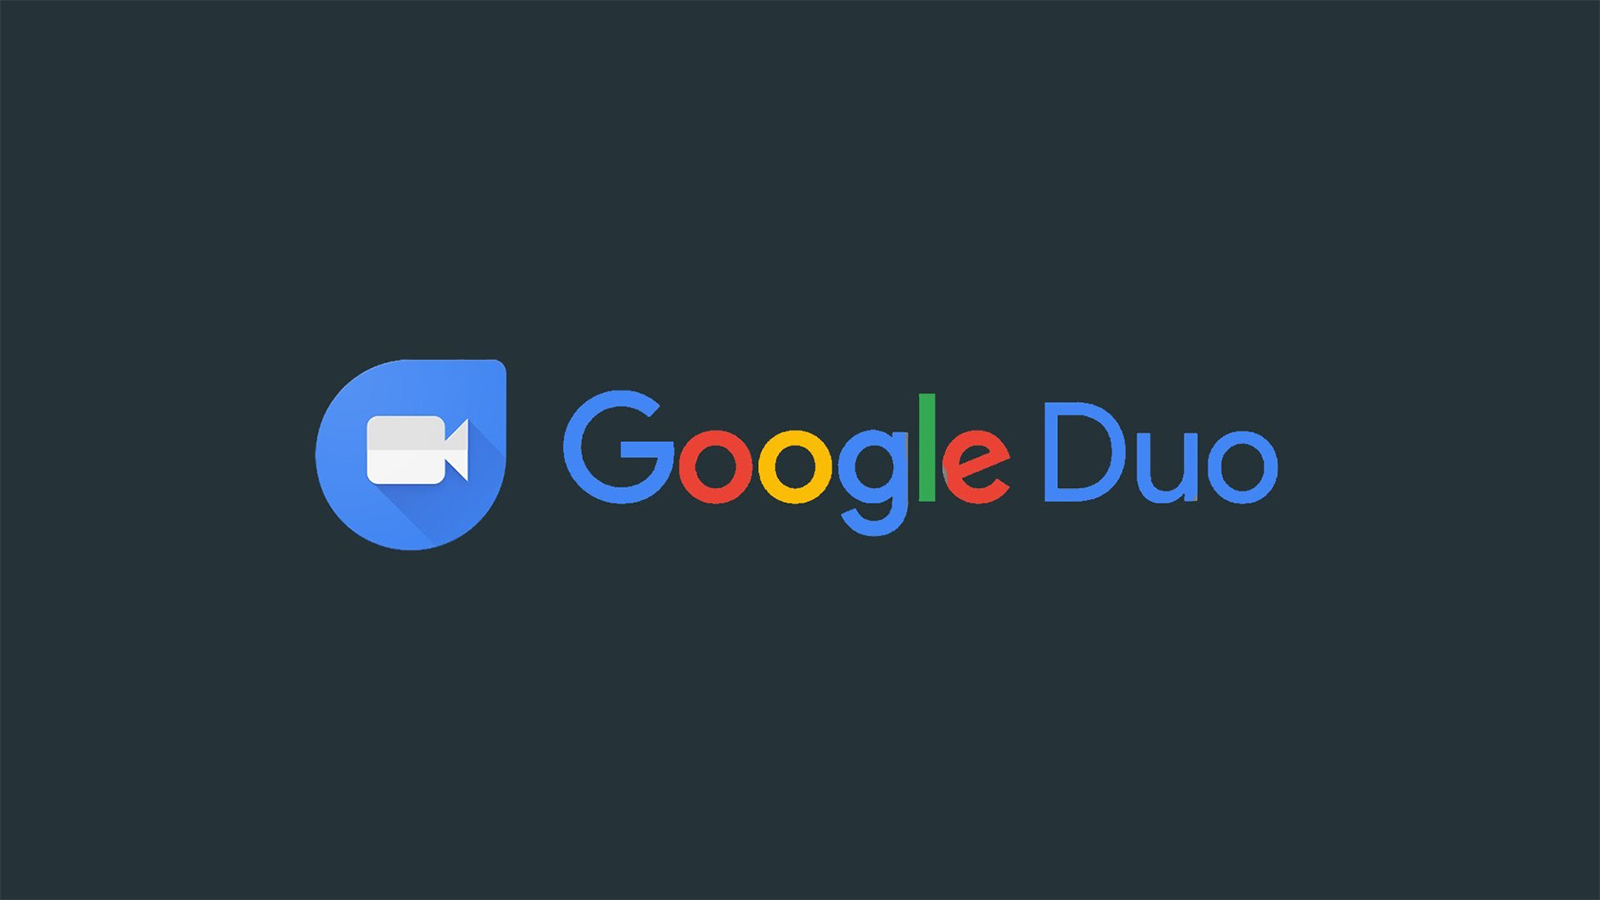 google duo app free